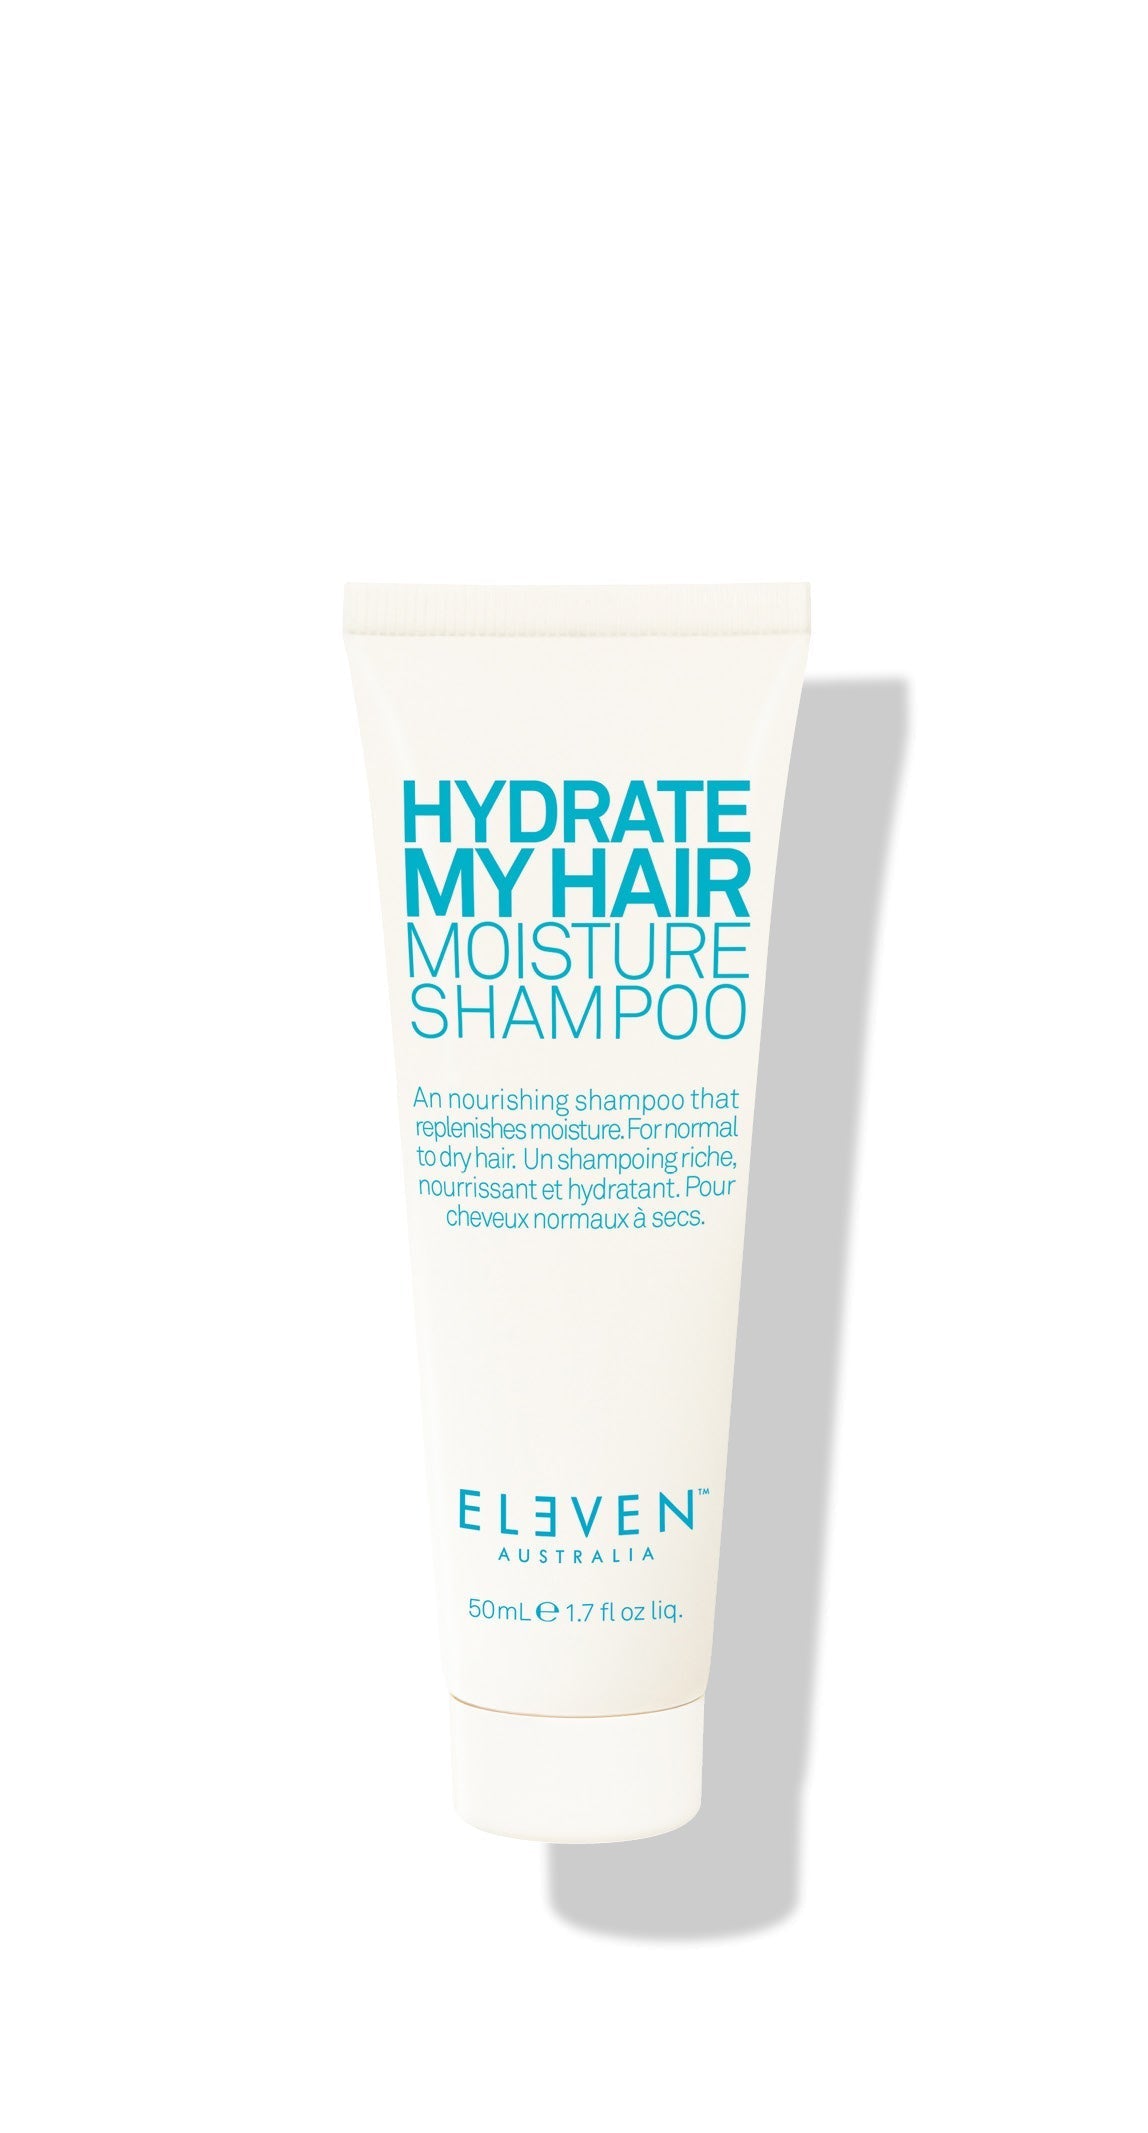 Hydrate My Hair Moisture Shampoo - 50ml